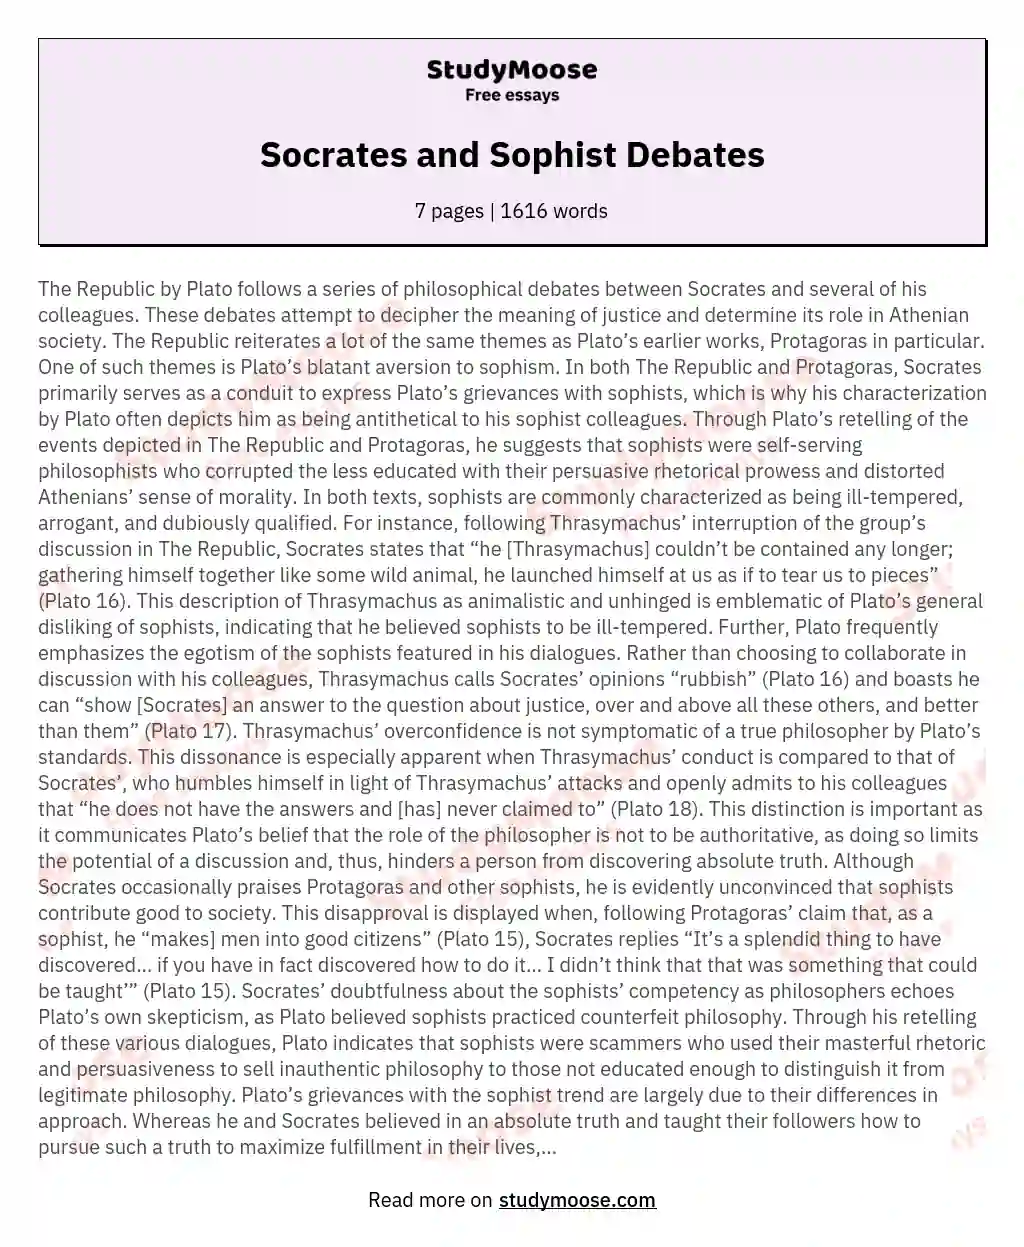 Socrates and Sophist Debates essay